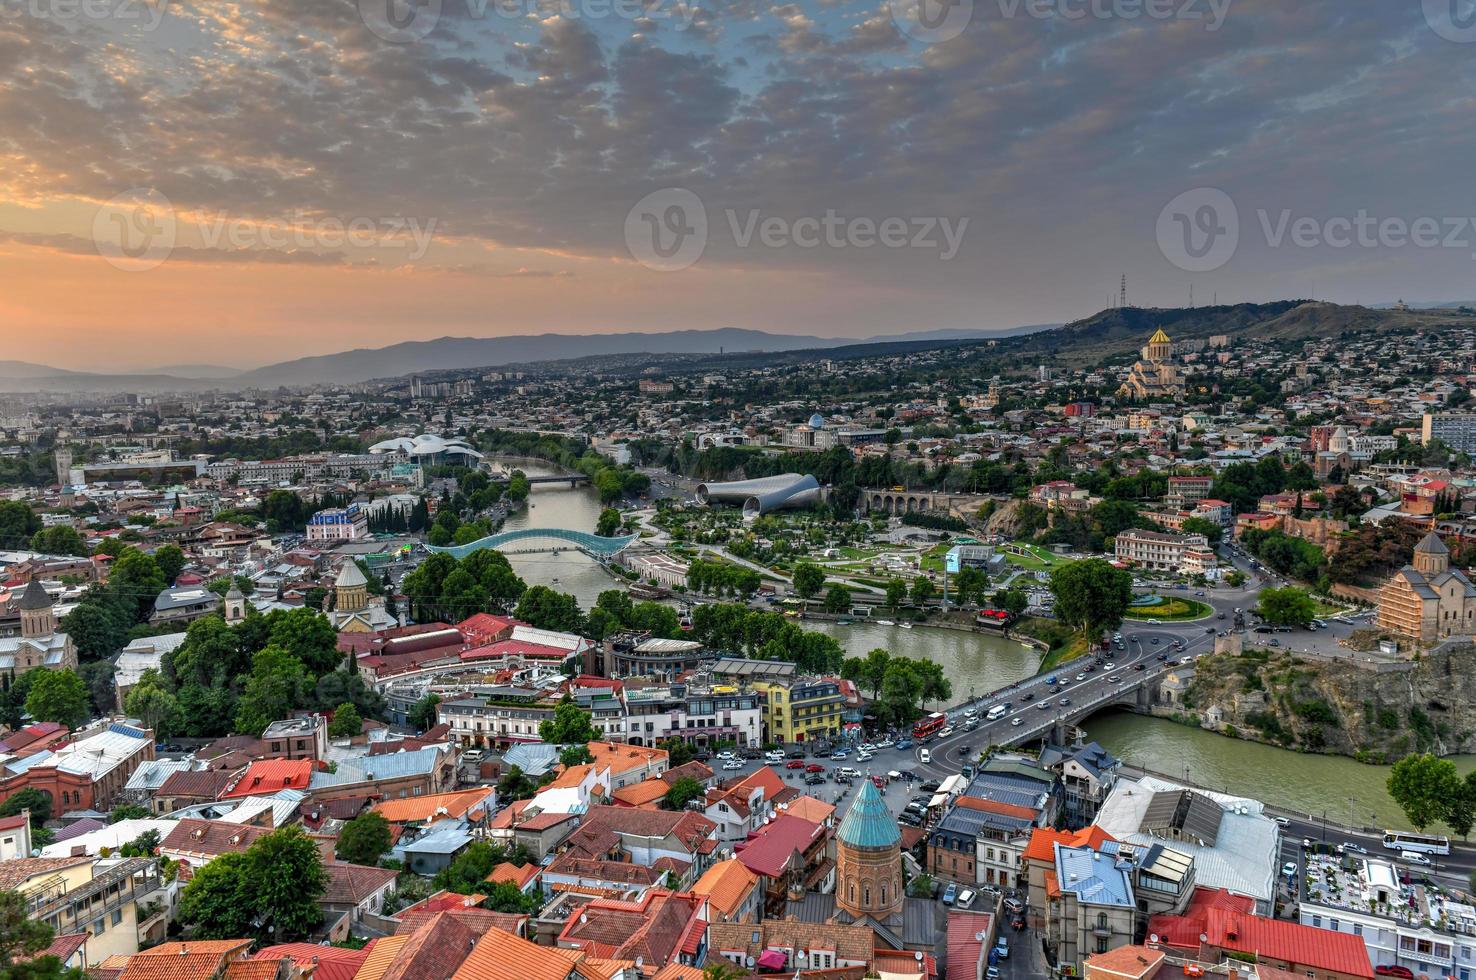 hermosa vista panorámica de tbilisi desde la fortaleza de narikala en georgia. foto